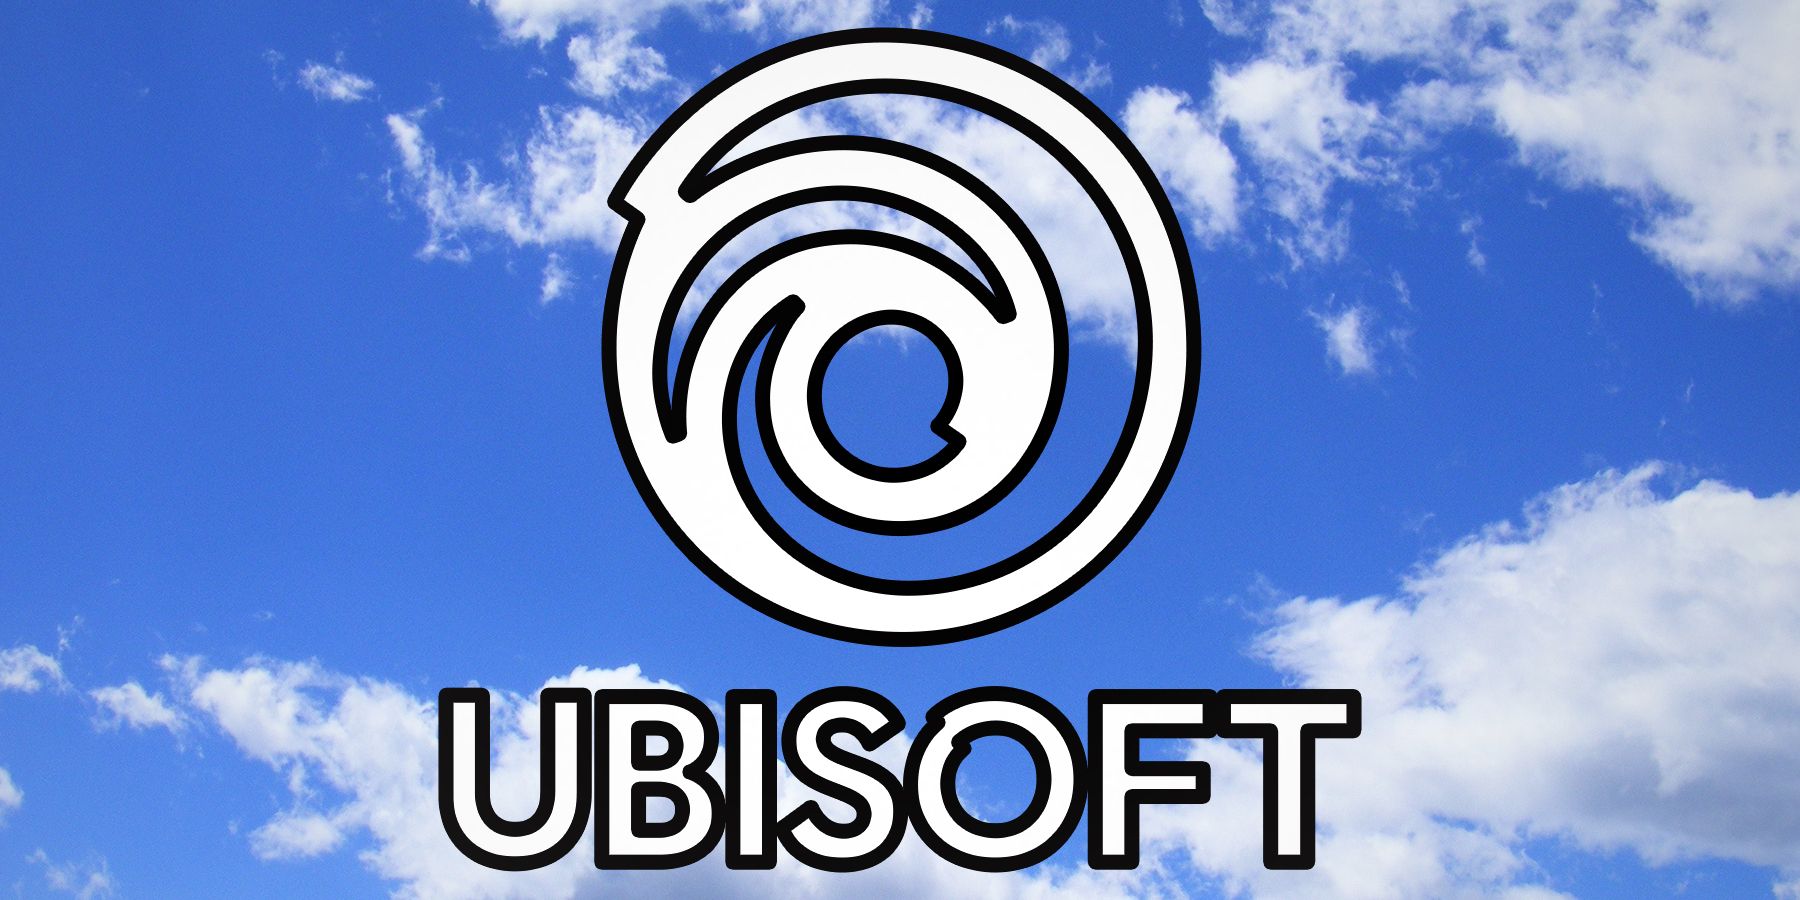 Ubisoft logo over clouds